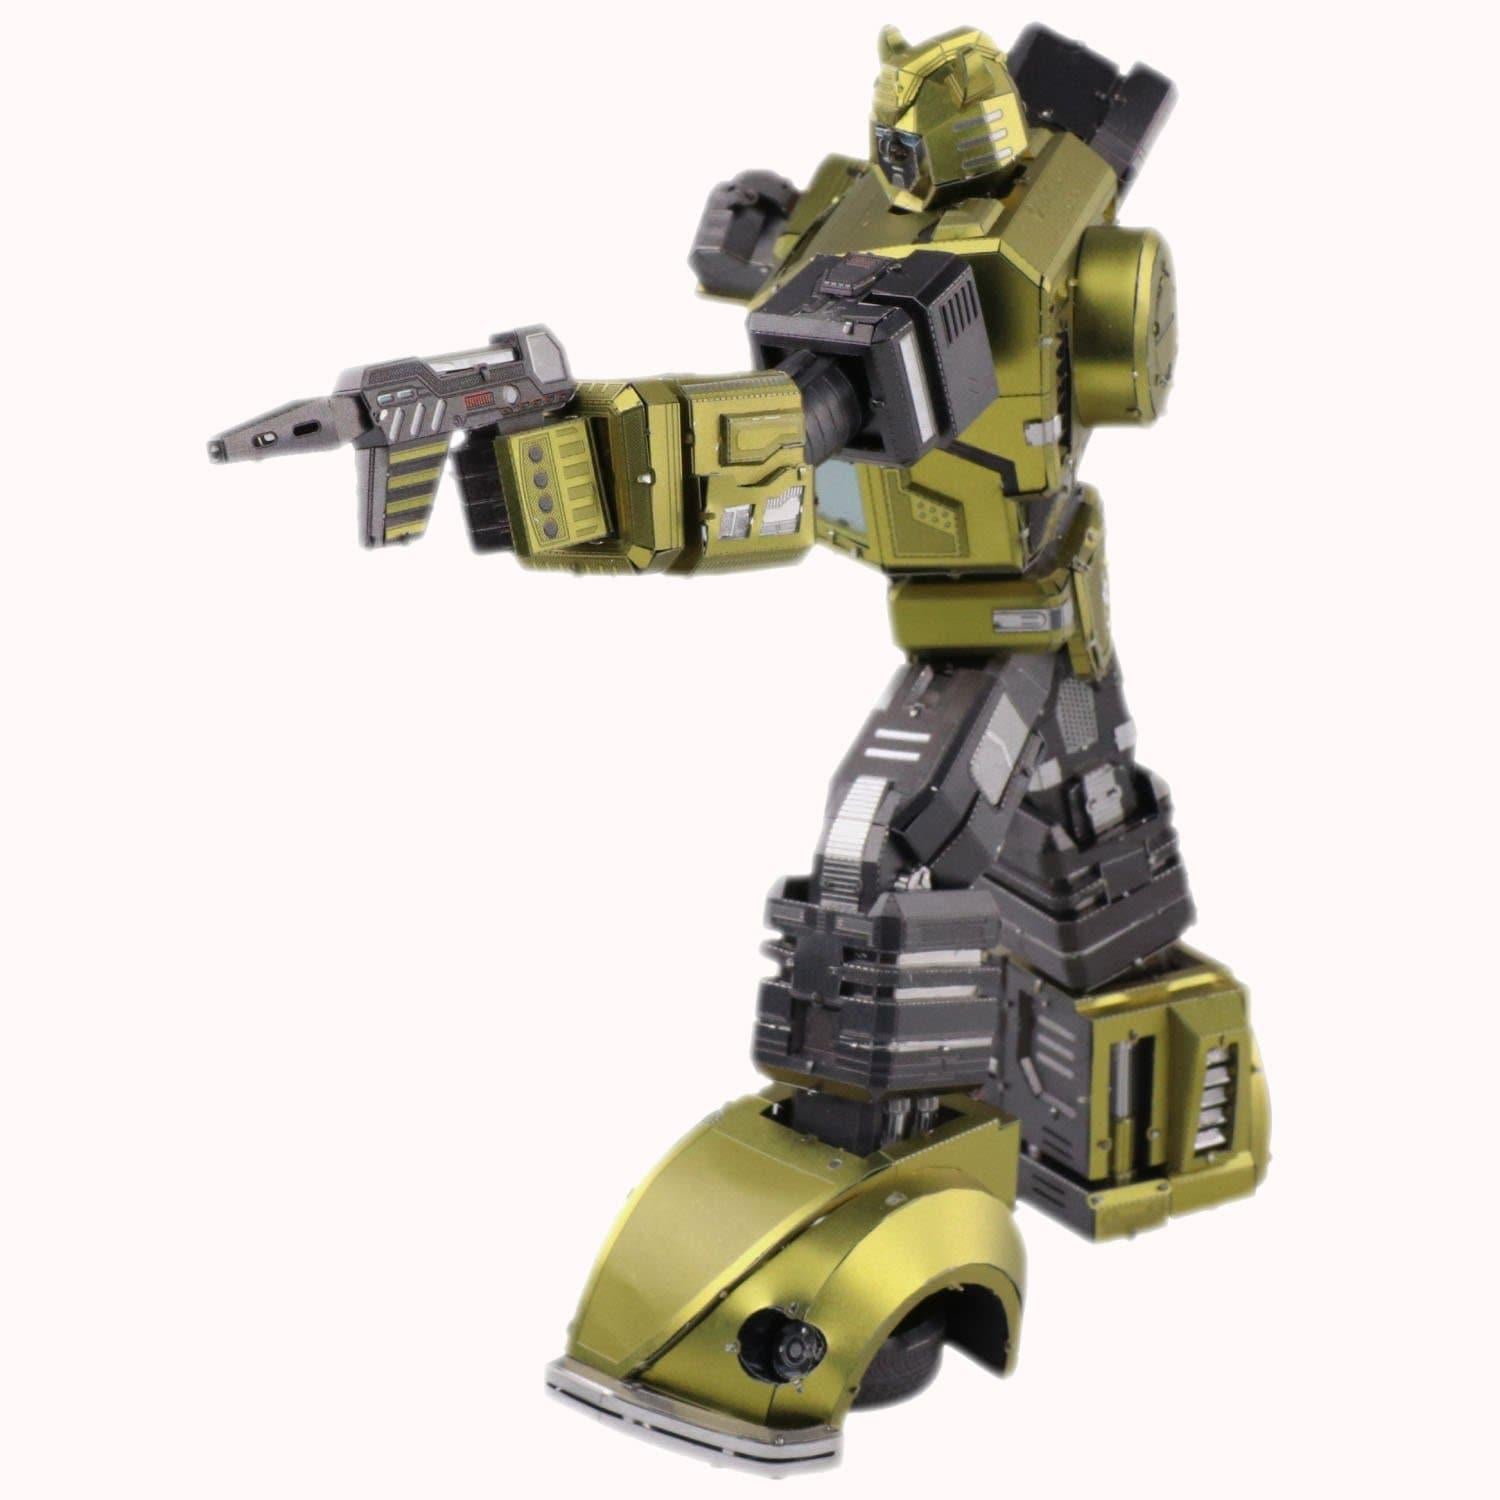 MU Model - Transformers Bumblebee Metal Assembly Kit